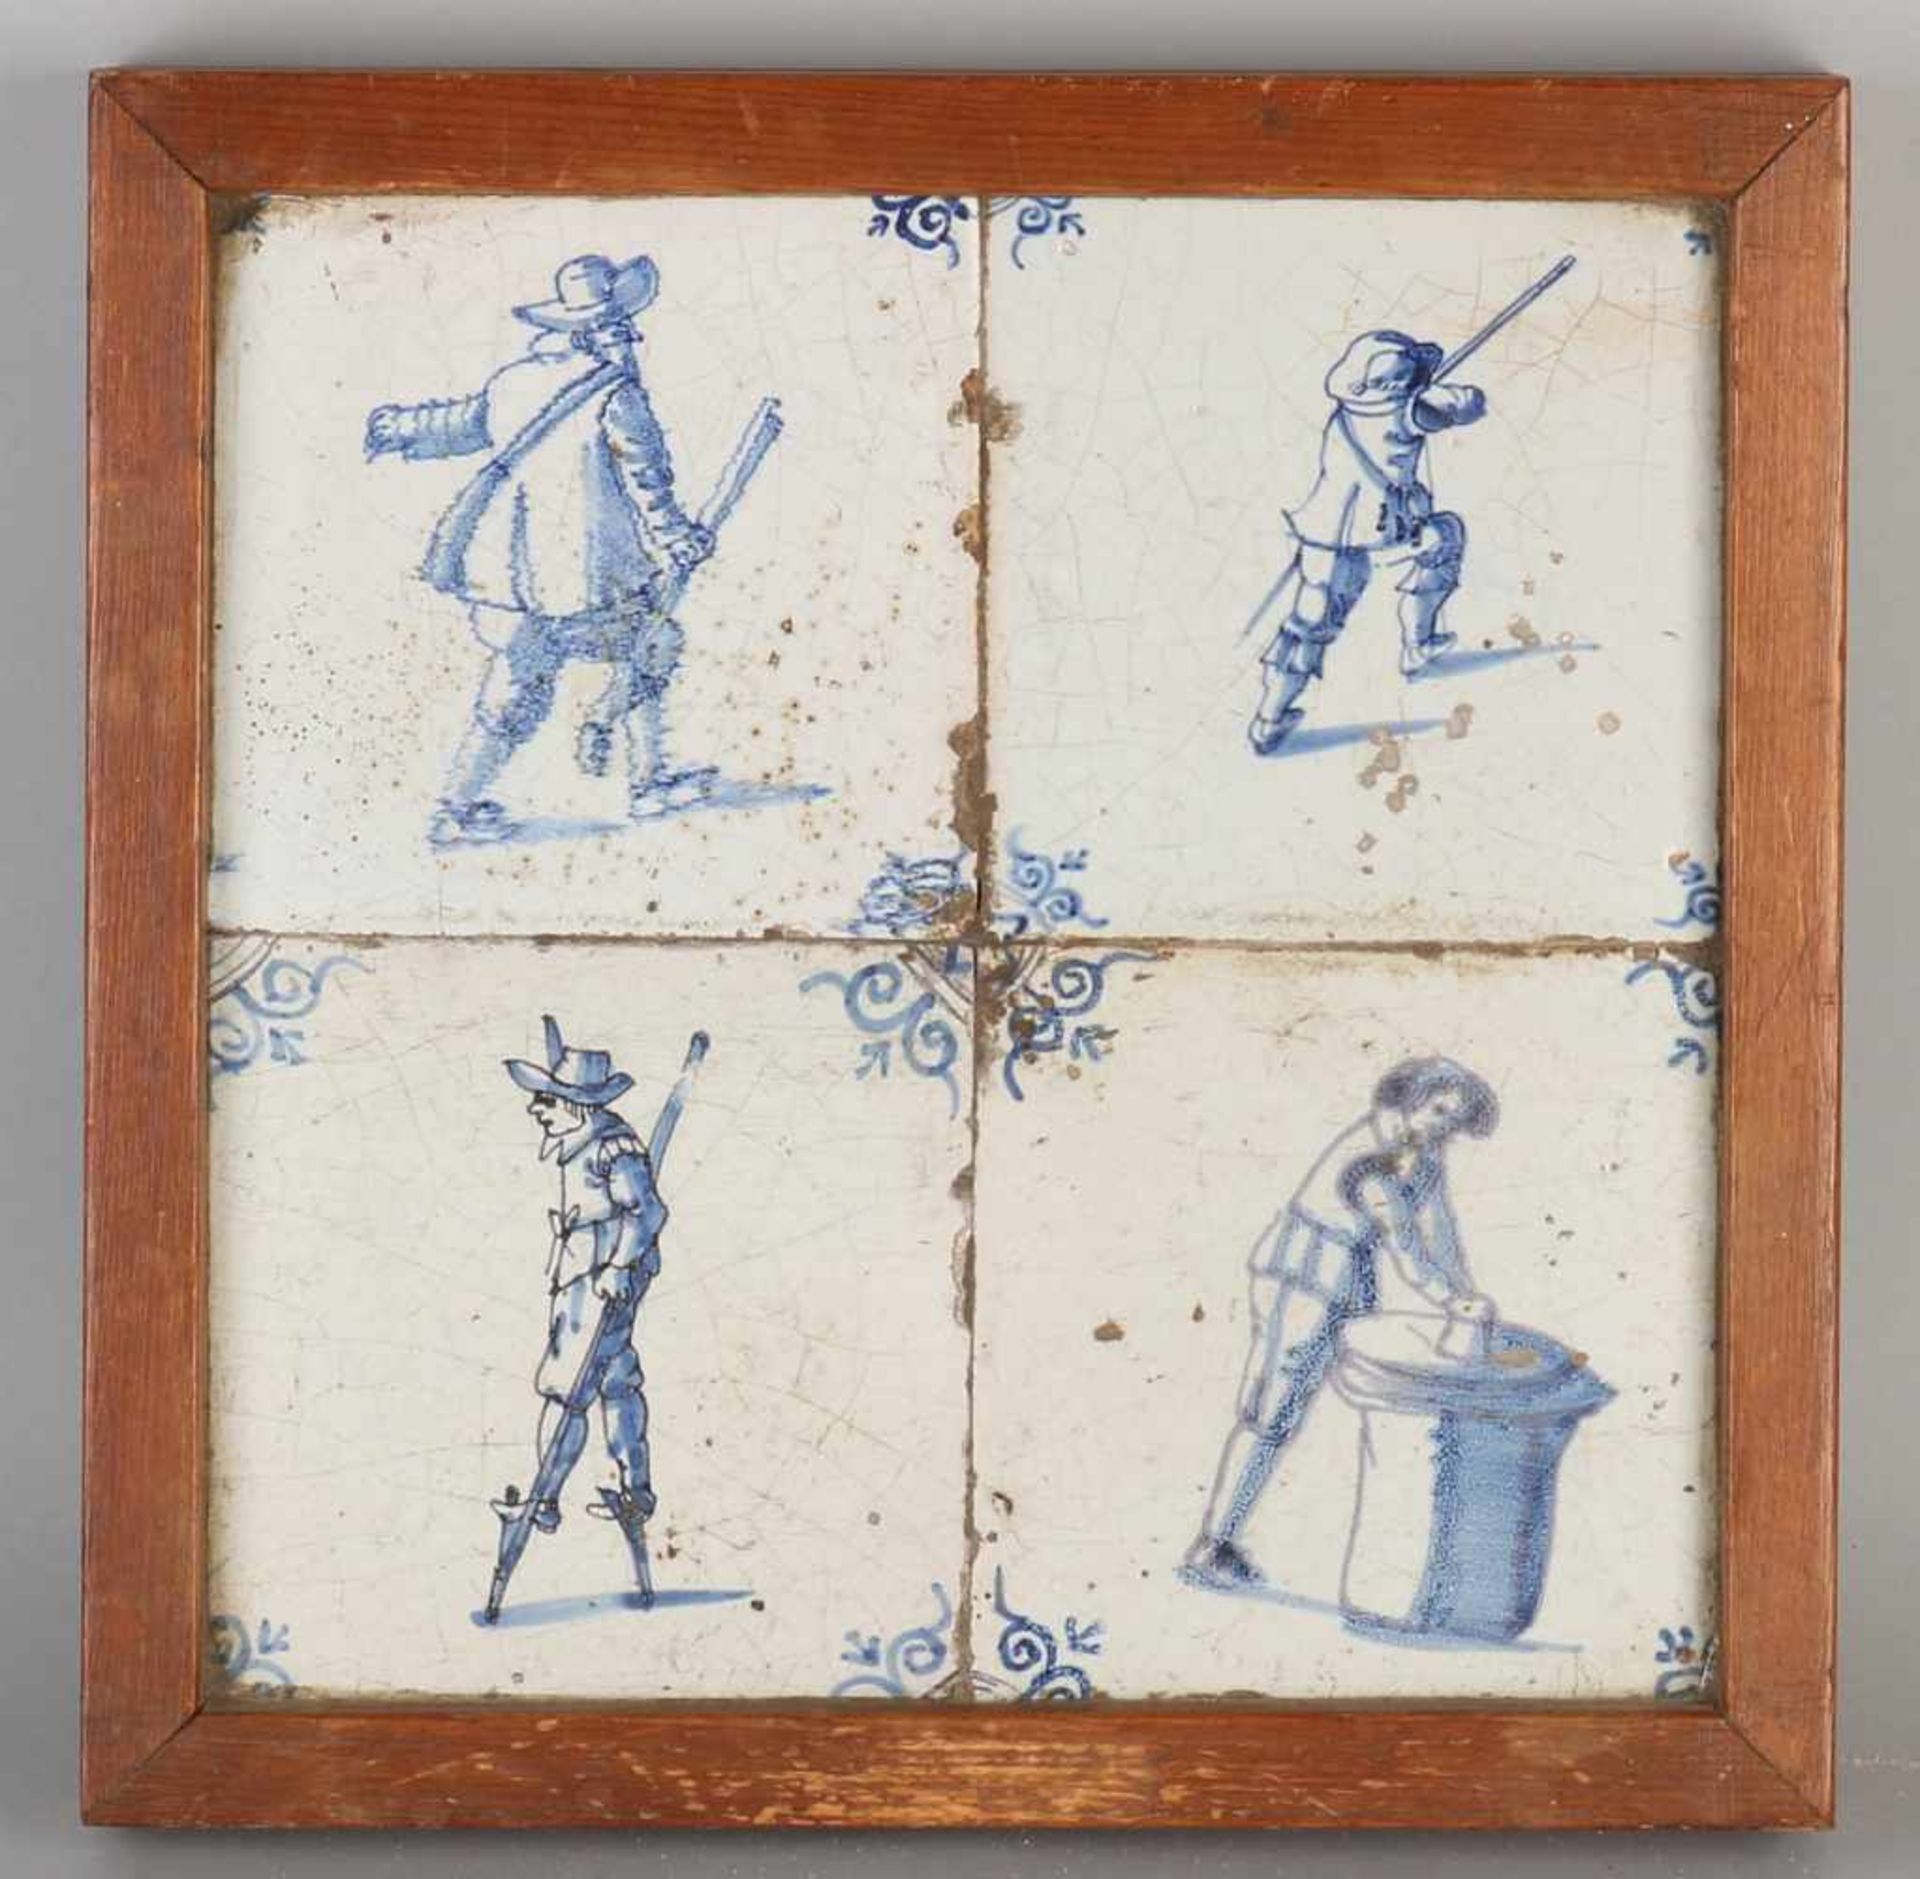 17th century Dutch 4-pass tile panel. Figures 2x with musket. 1x Stilt Walking. 1x Tanner.